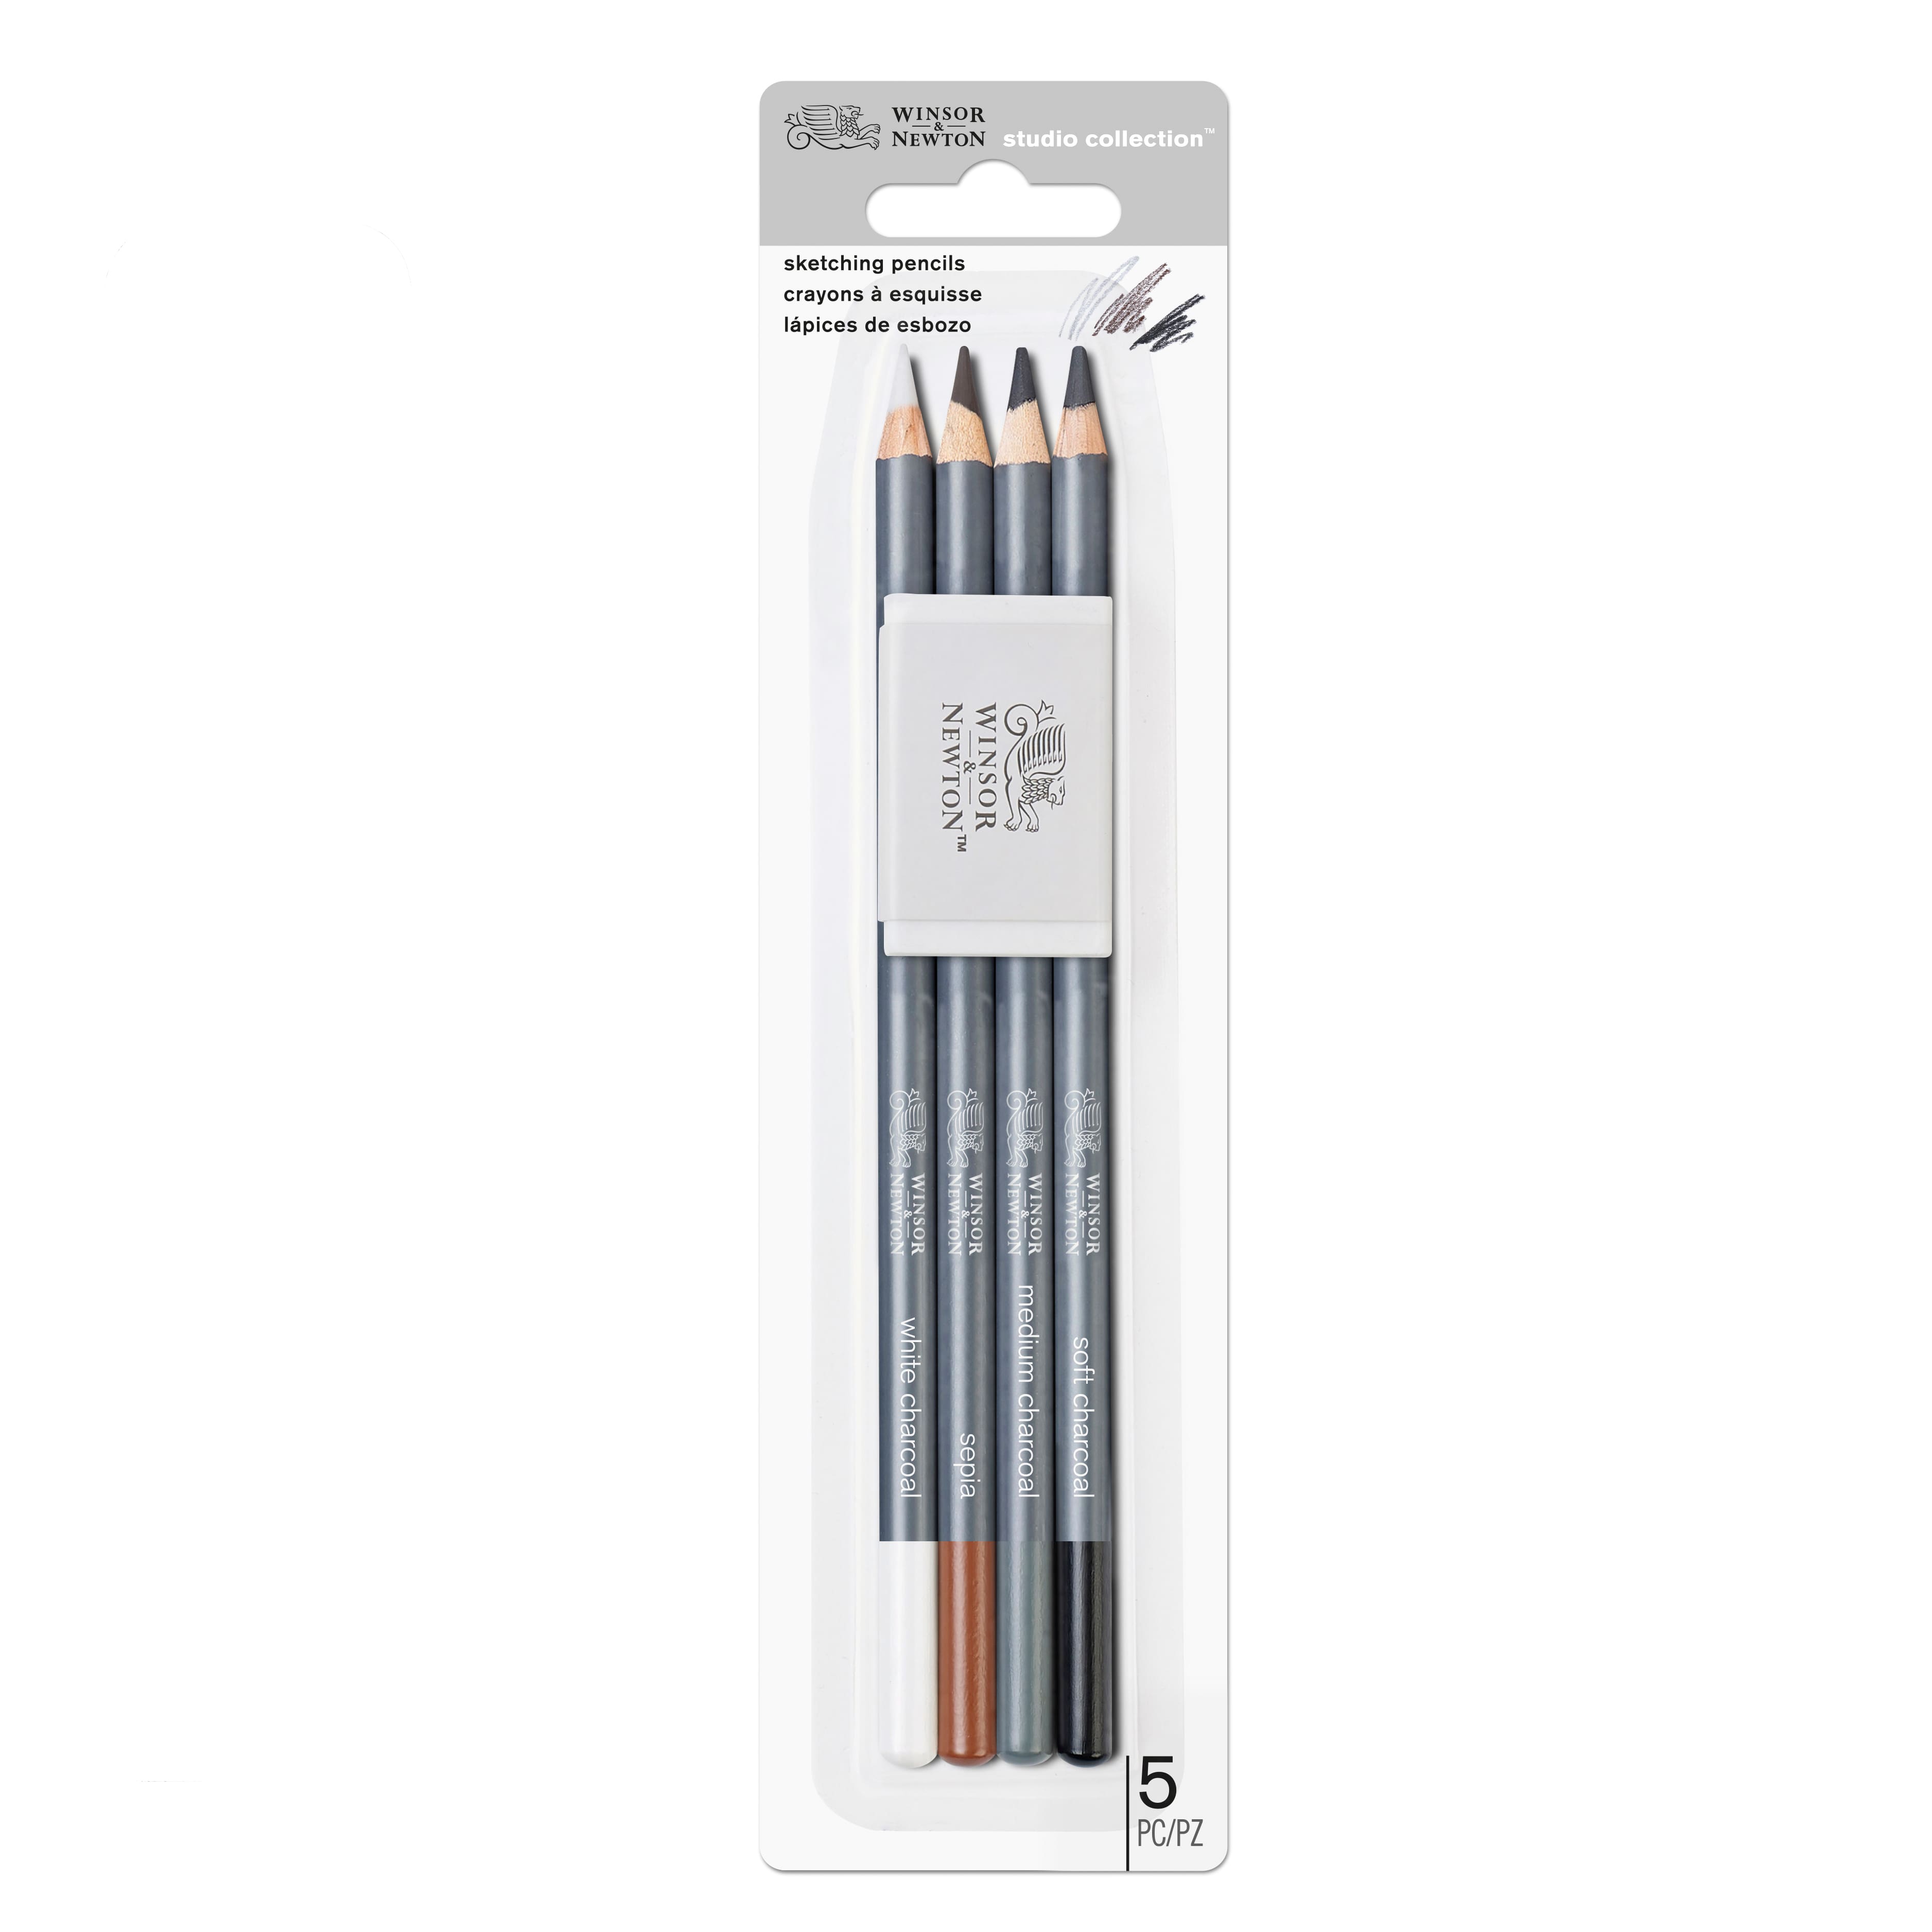 GETHPEN Sketch Pencils for Drawing,12 Pack Drawing Pencils, Graphite Pencils, Graphite Pencils for Drawing, Art Pencils for Drawing and Shading, Shadi